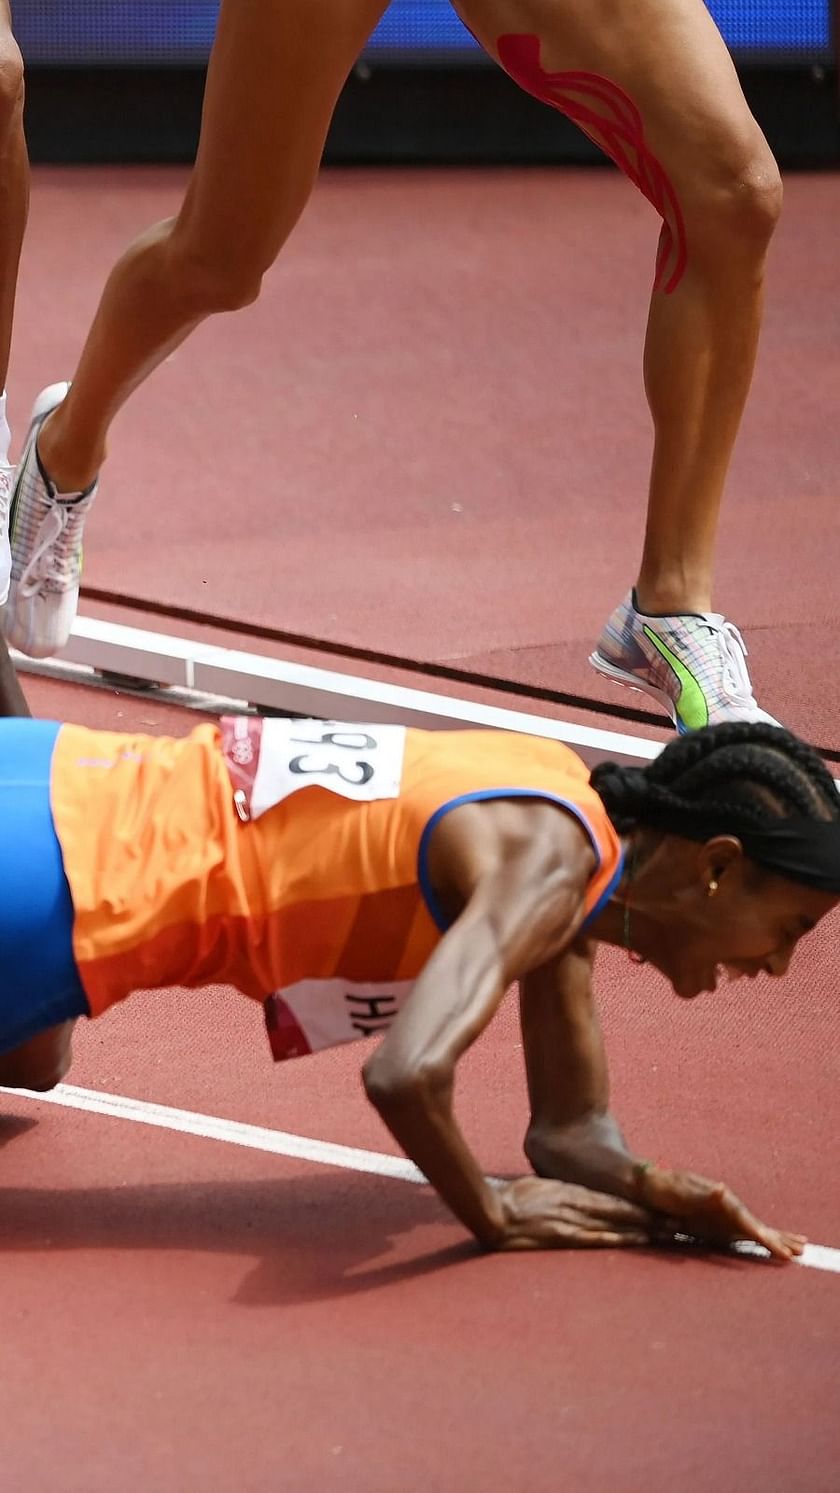 Dutch runner Hassan falls, gets up and wins 1,500 meter heat